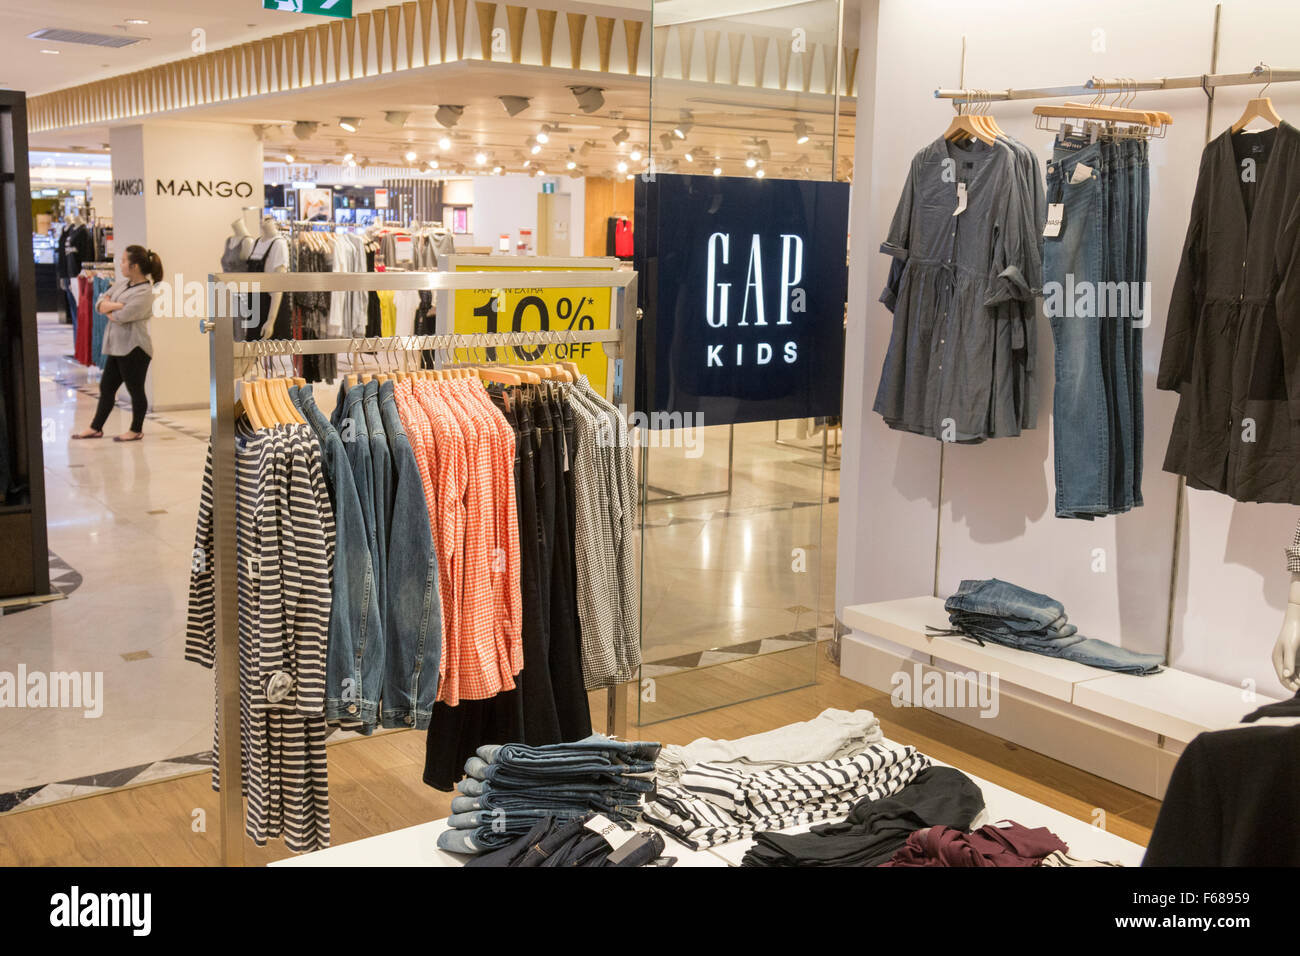 Gap kids clothing store in Hanoi shopping centre,Vietnam,Asia Stock Photo -  Alamy